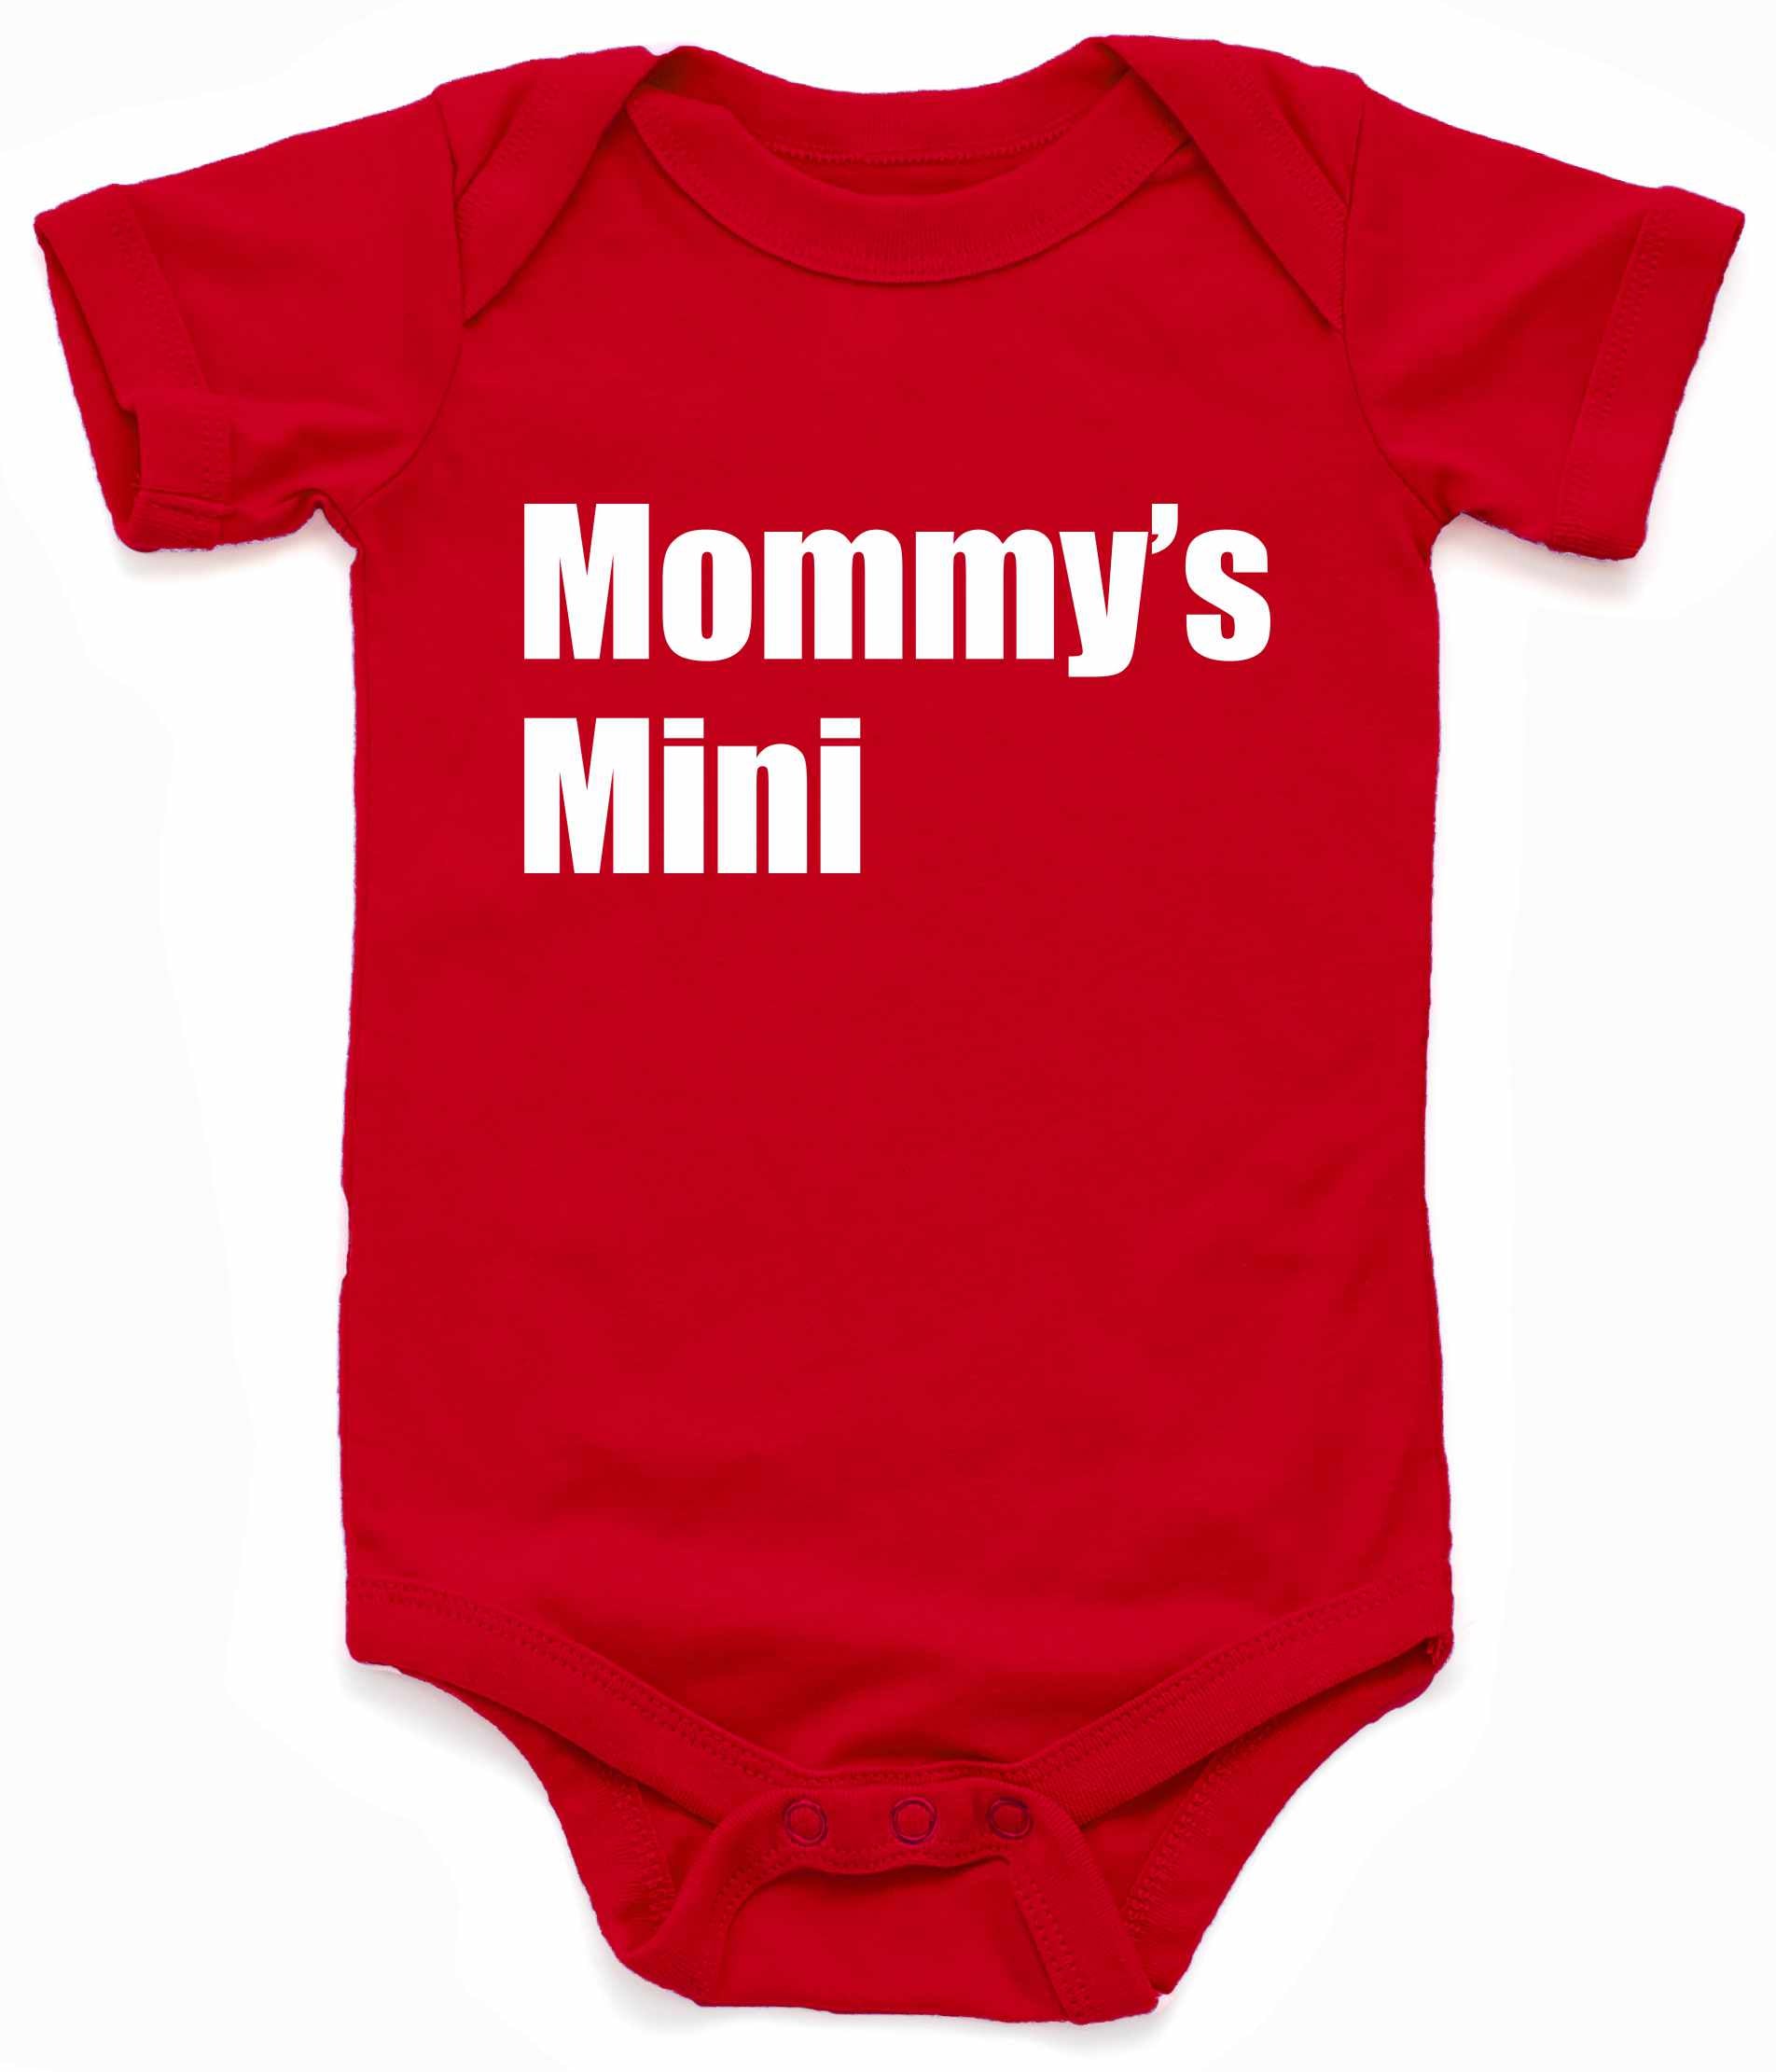 Mommy's Mini Infant BodySuit - Red / NewBorn - Red / 6 Month - Red / 12 Month - Red / 18 Month - Red / 24 Month